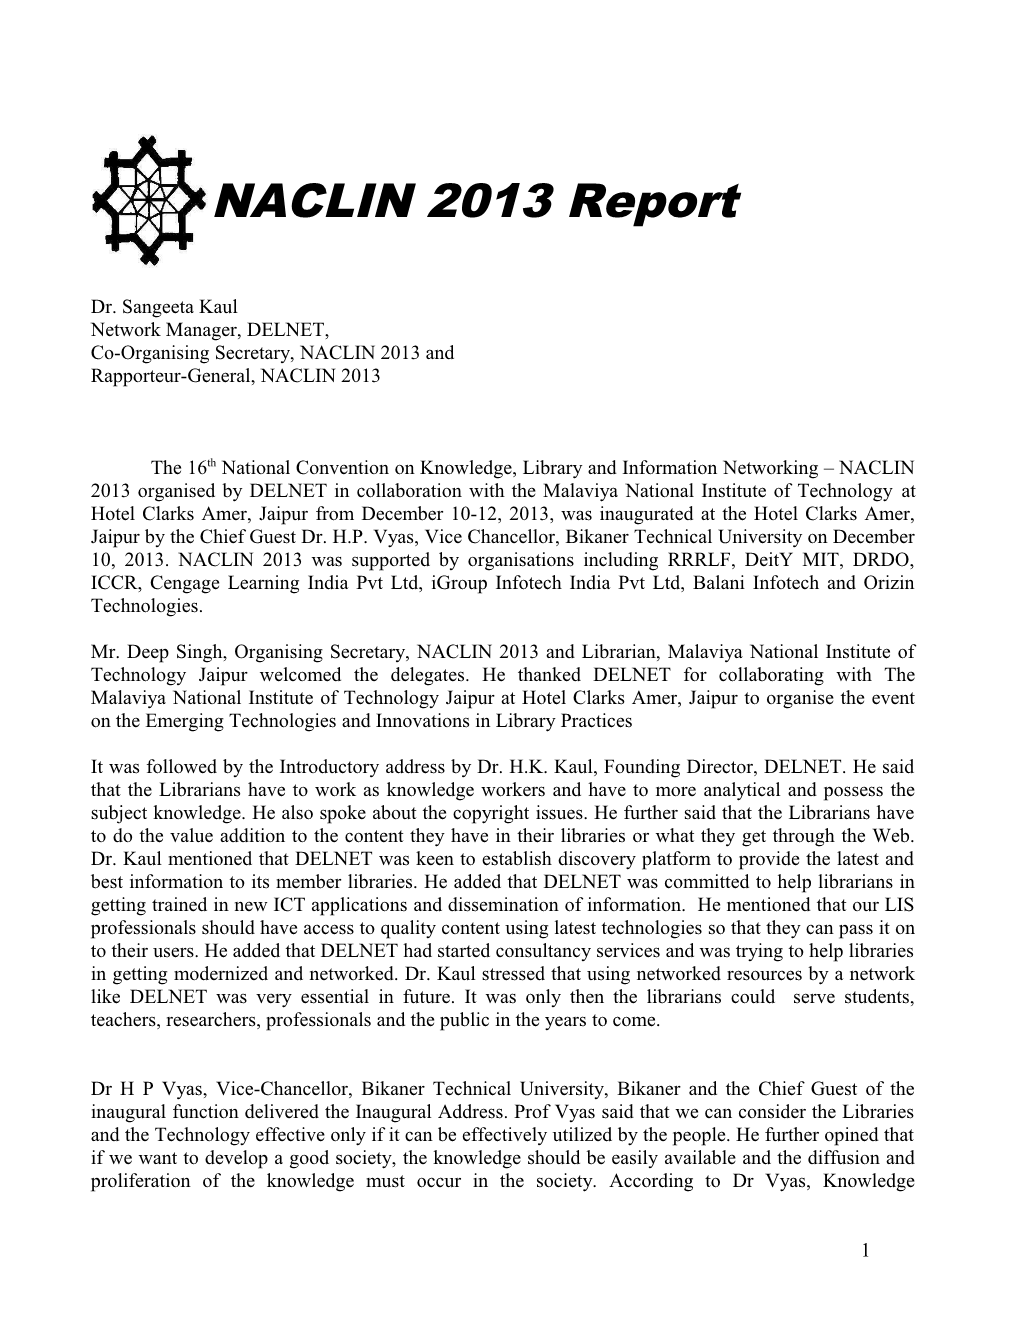 Co-Organising Secretary, NACLIN 2013 And